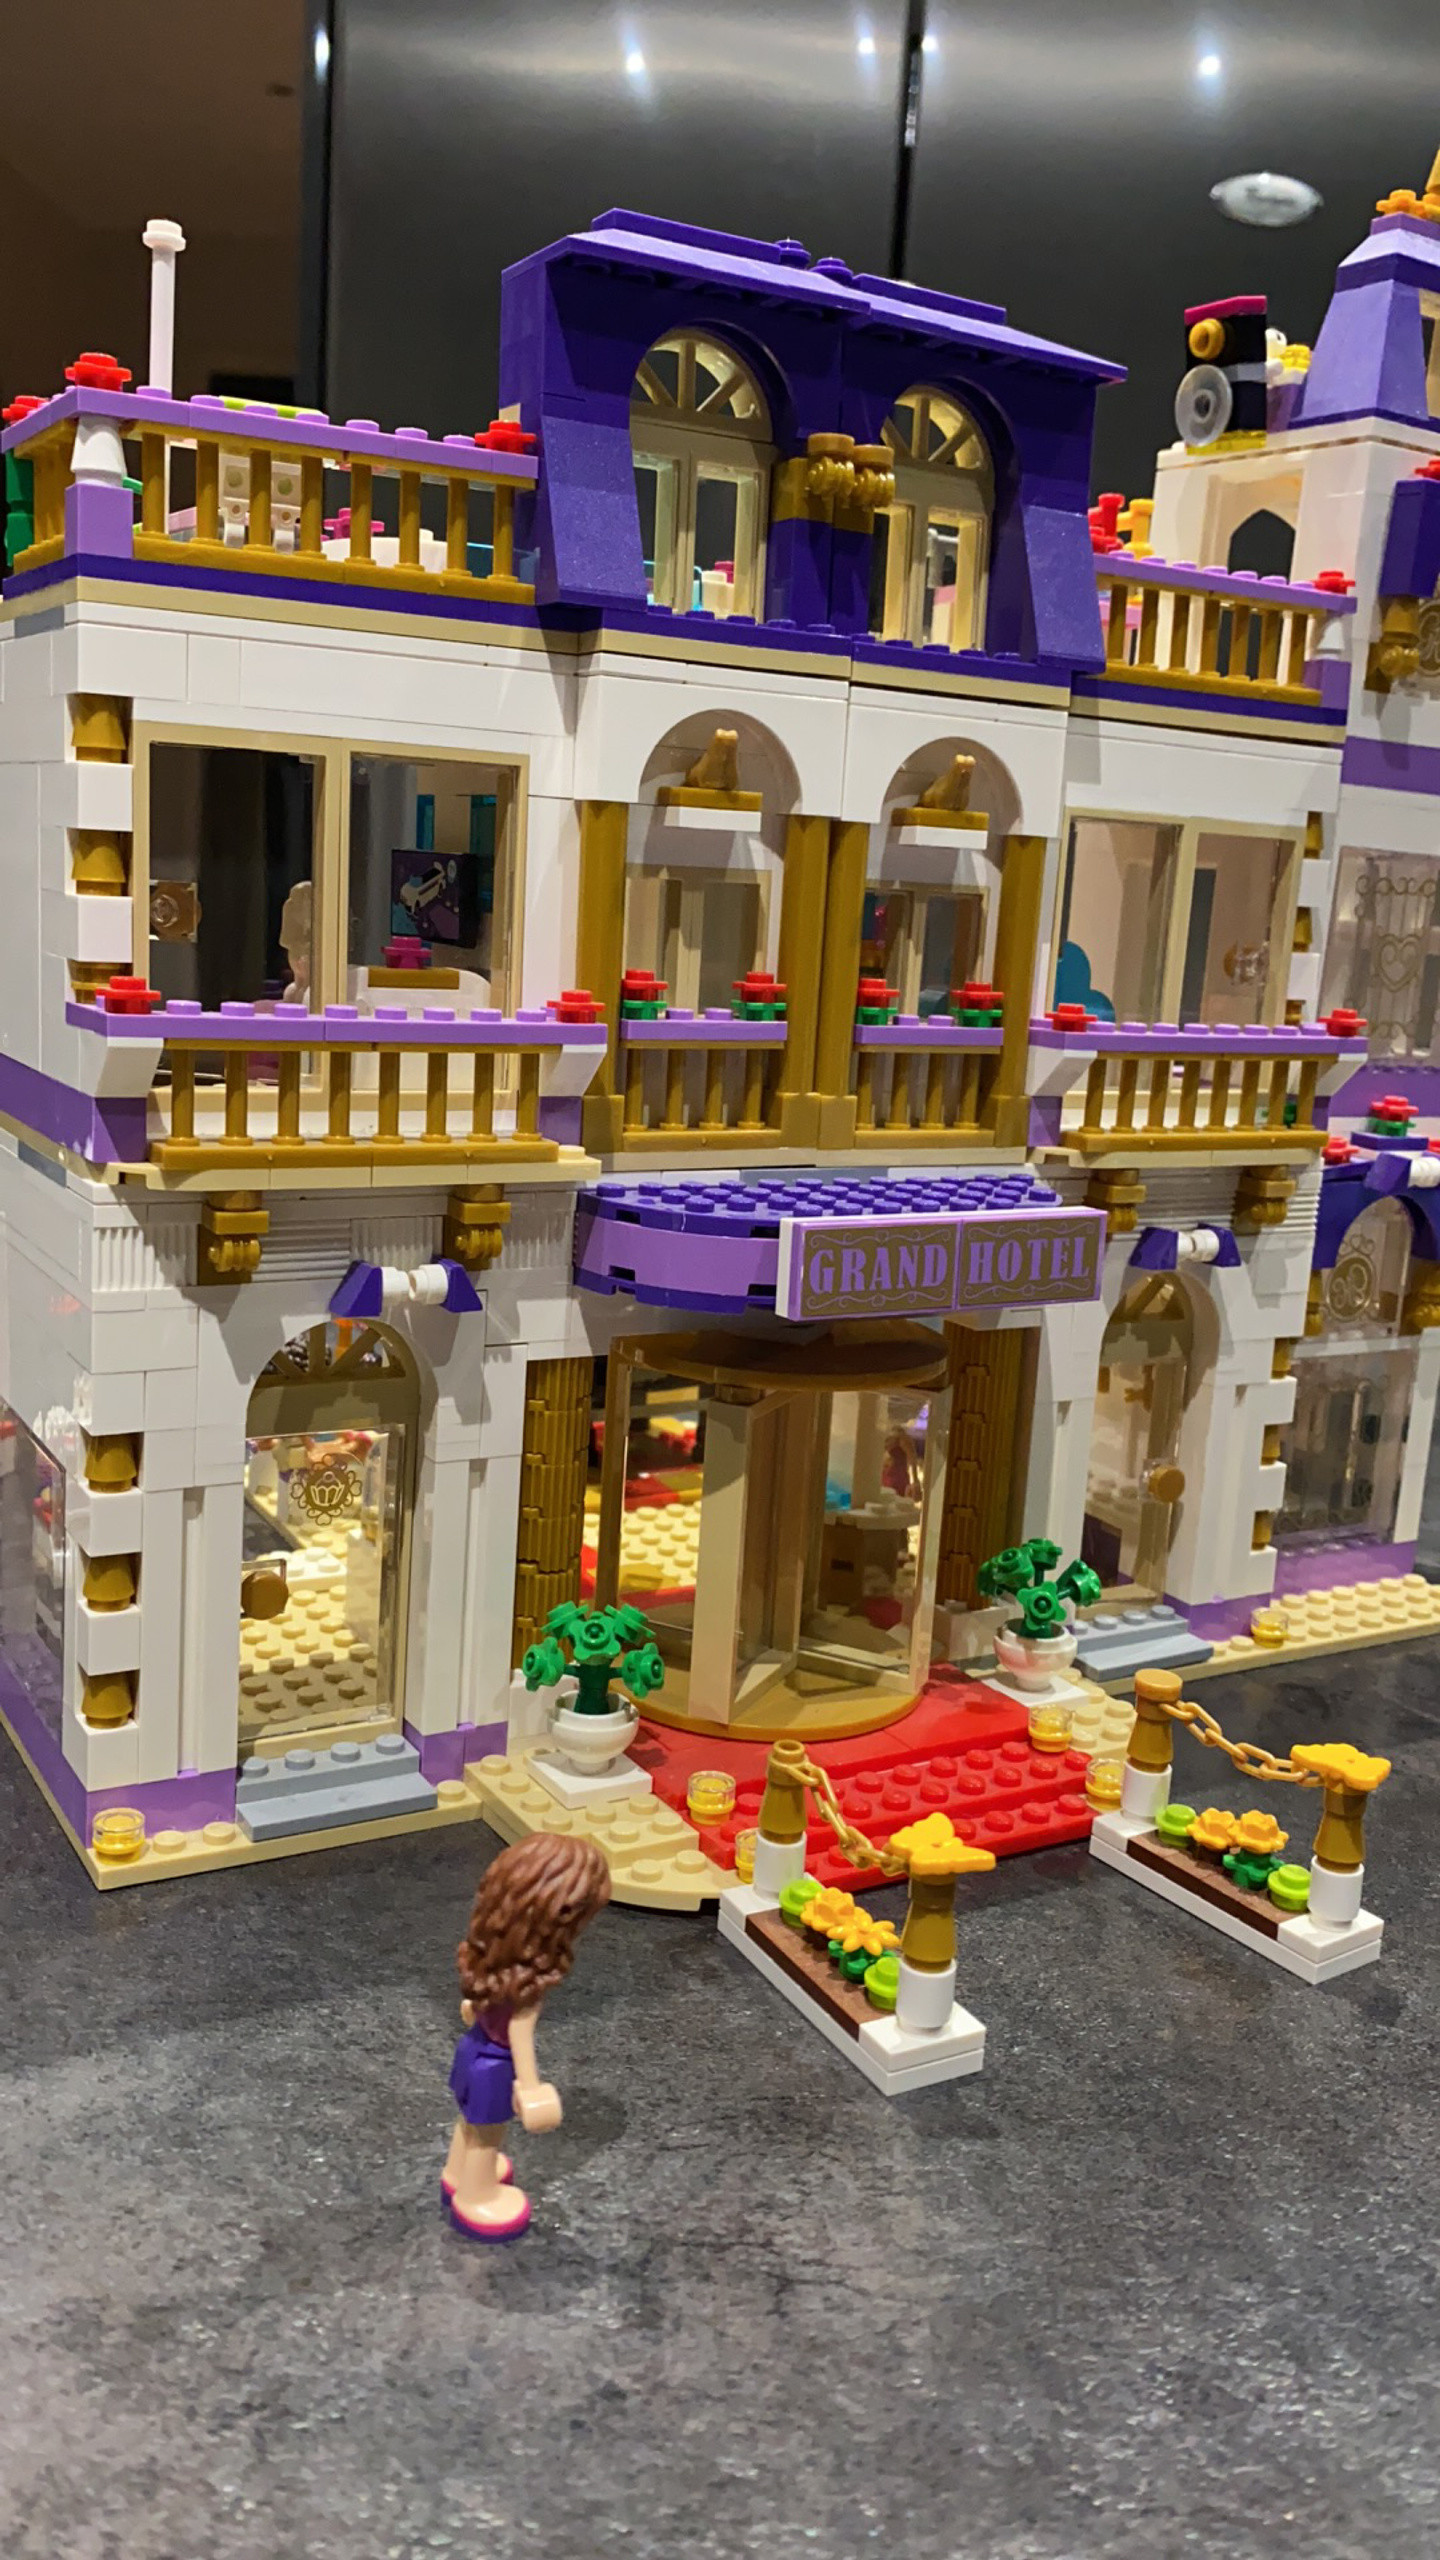 Grand hôtel LEGO friends